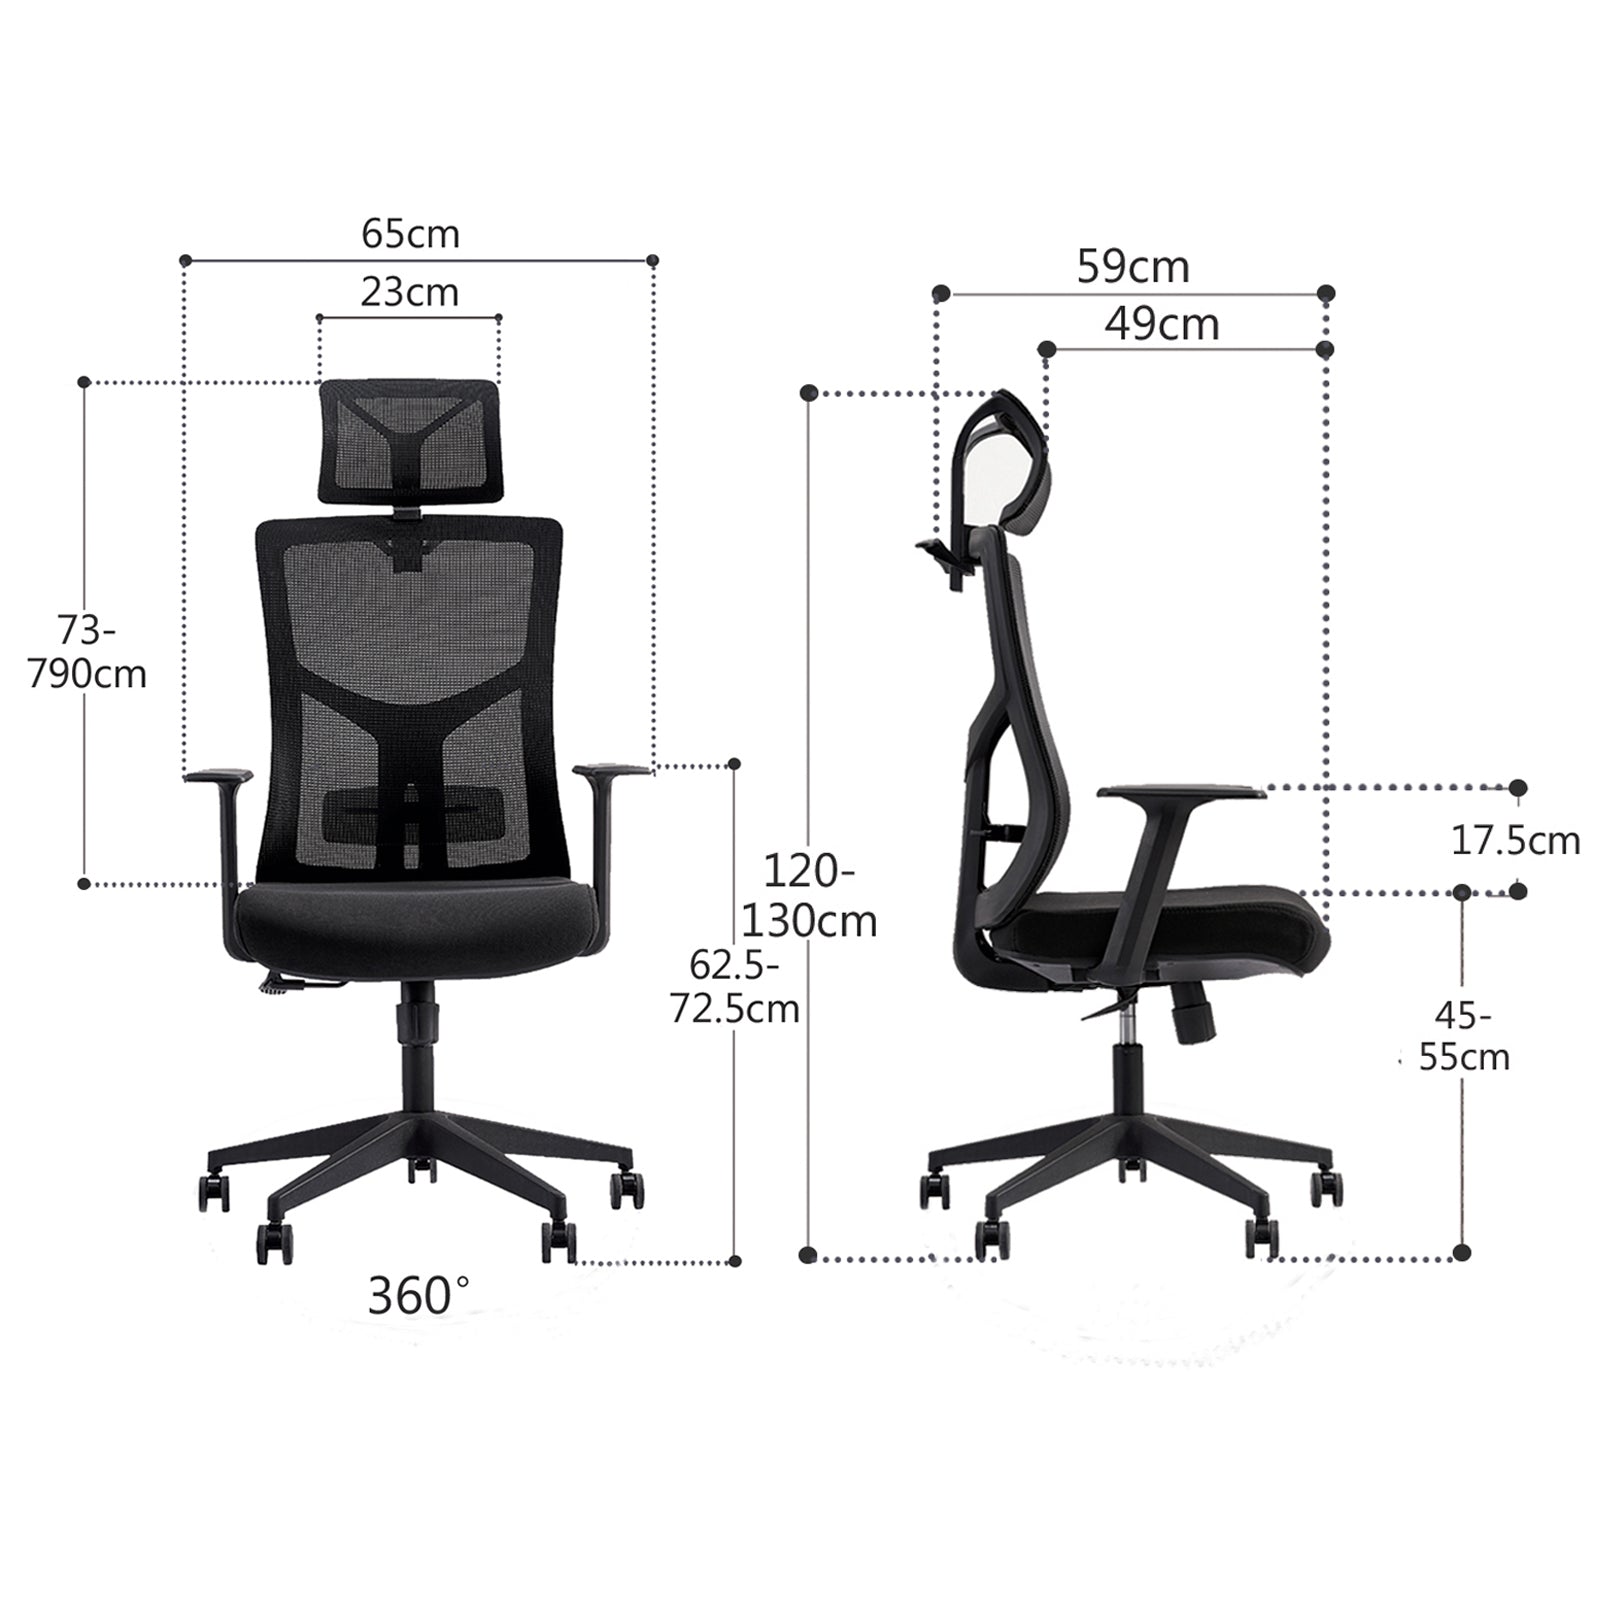 VOFFOV® ergonomic high-back mesh office chair with adjustable armrests, lumbar support, headrest - Black